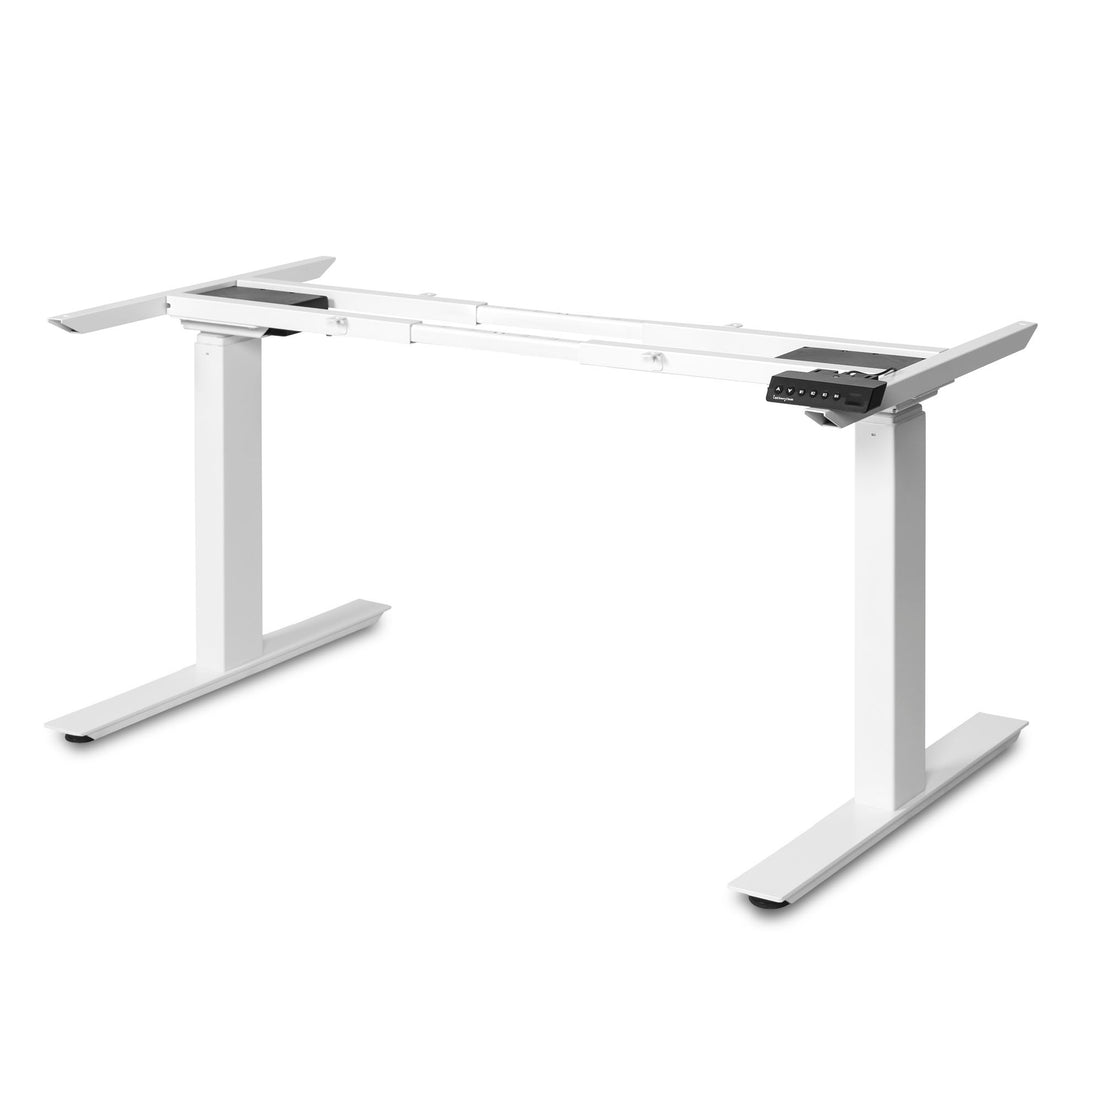 UpDown PRO Electric Standing Desk Frame